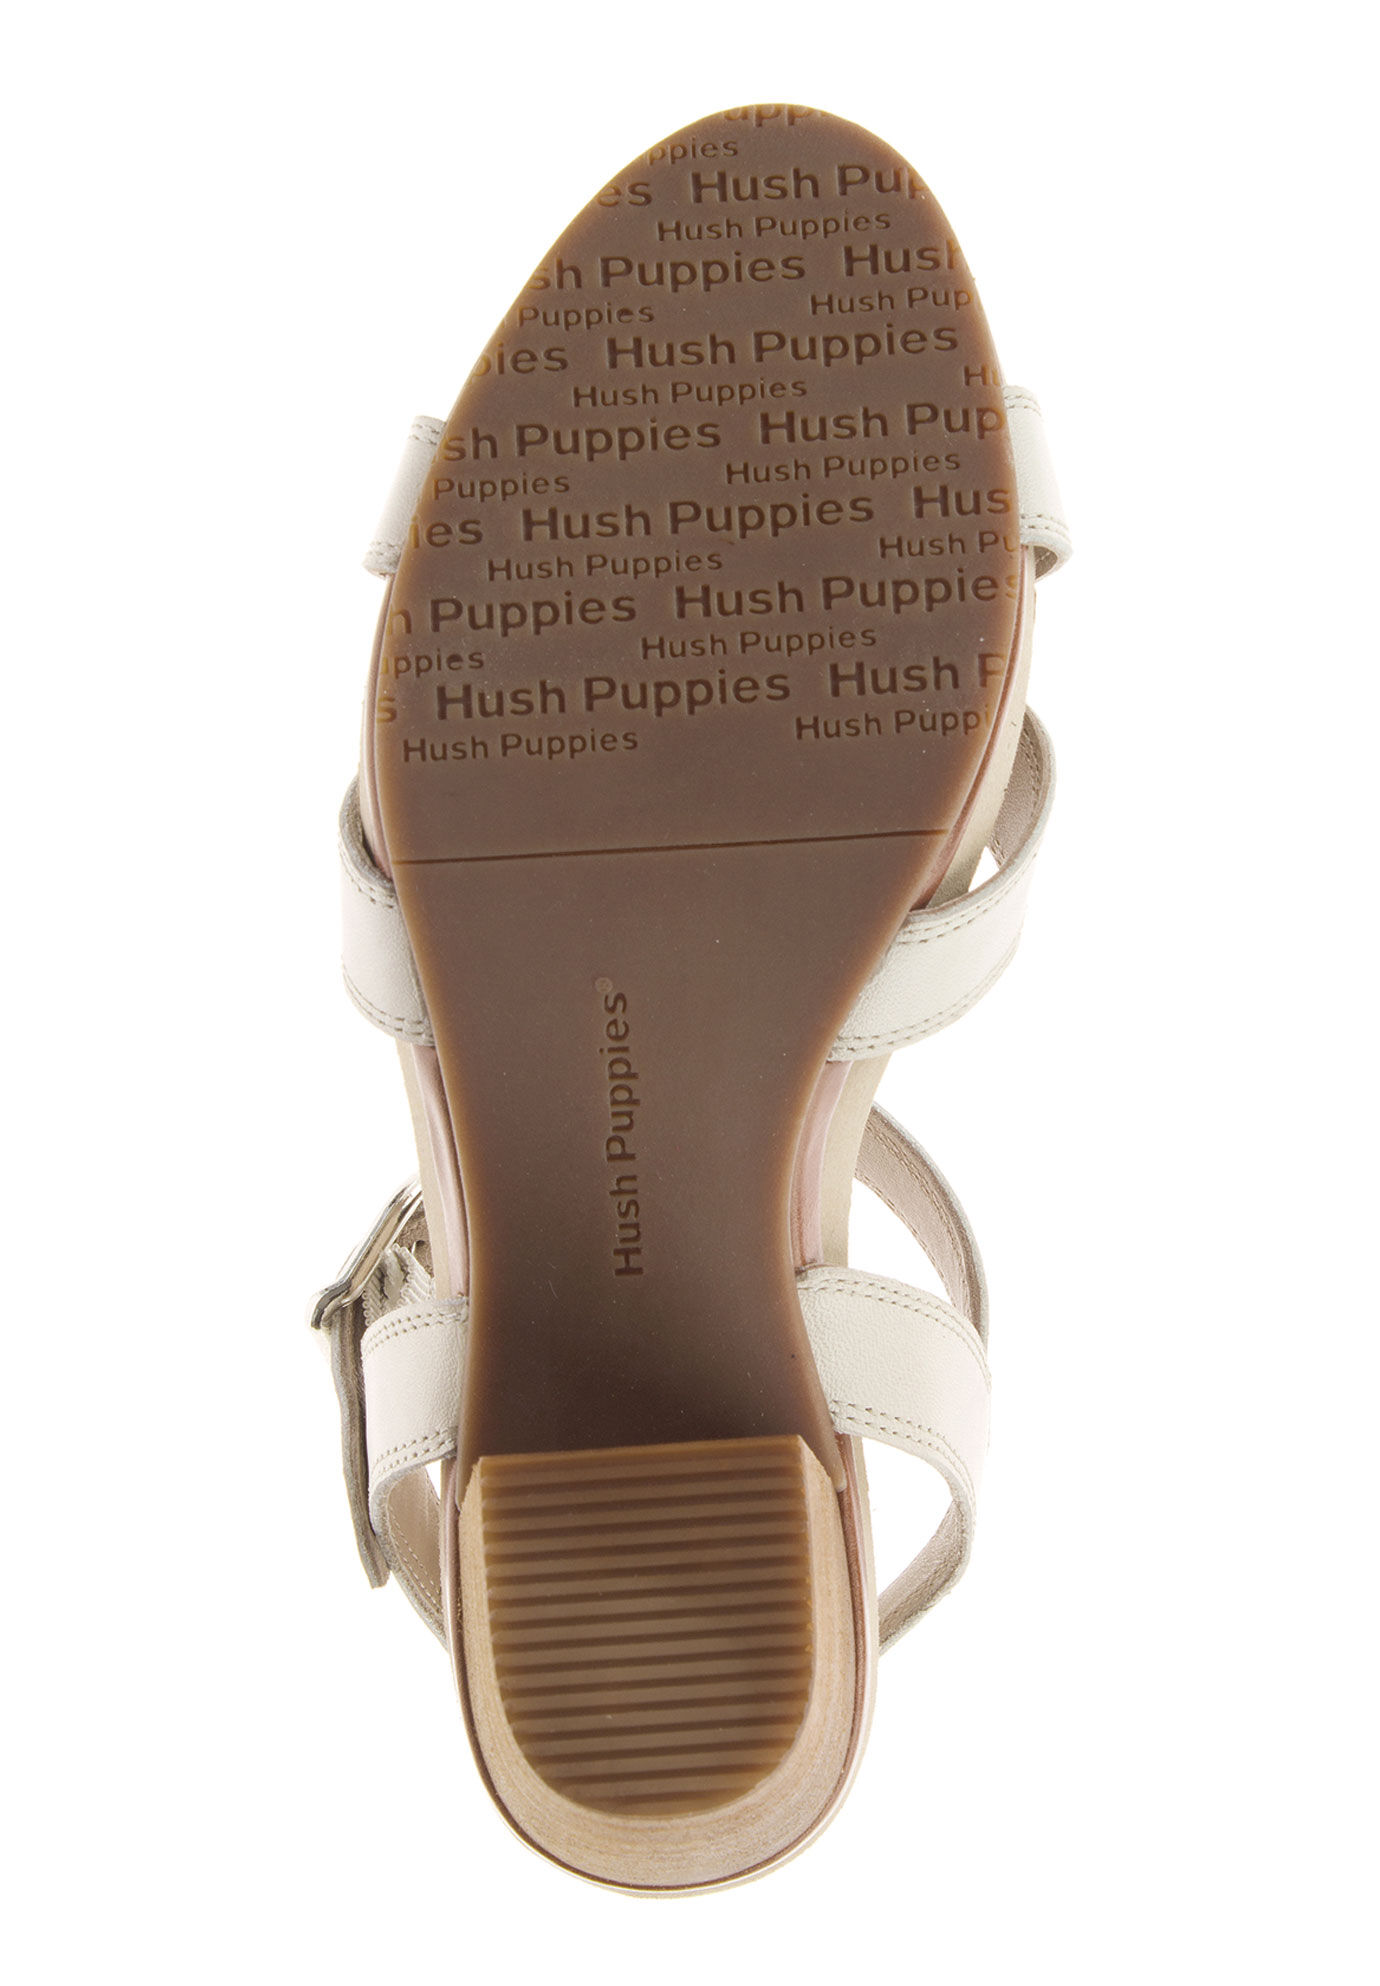 Hush Puppies Womens Mariska Buckle QTR Fashion Sandals